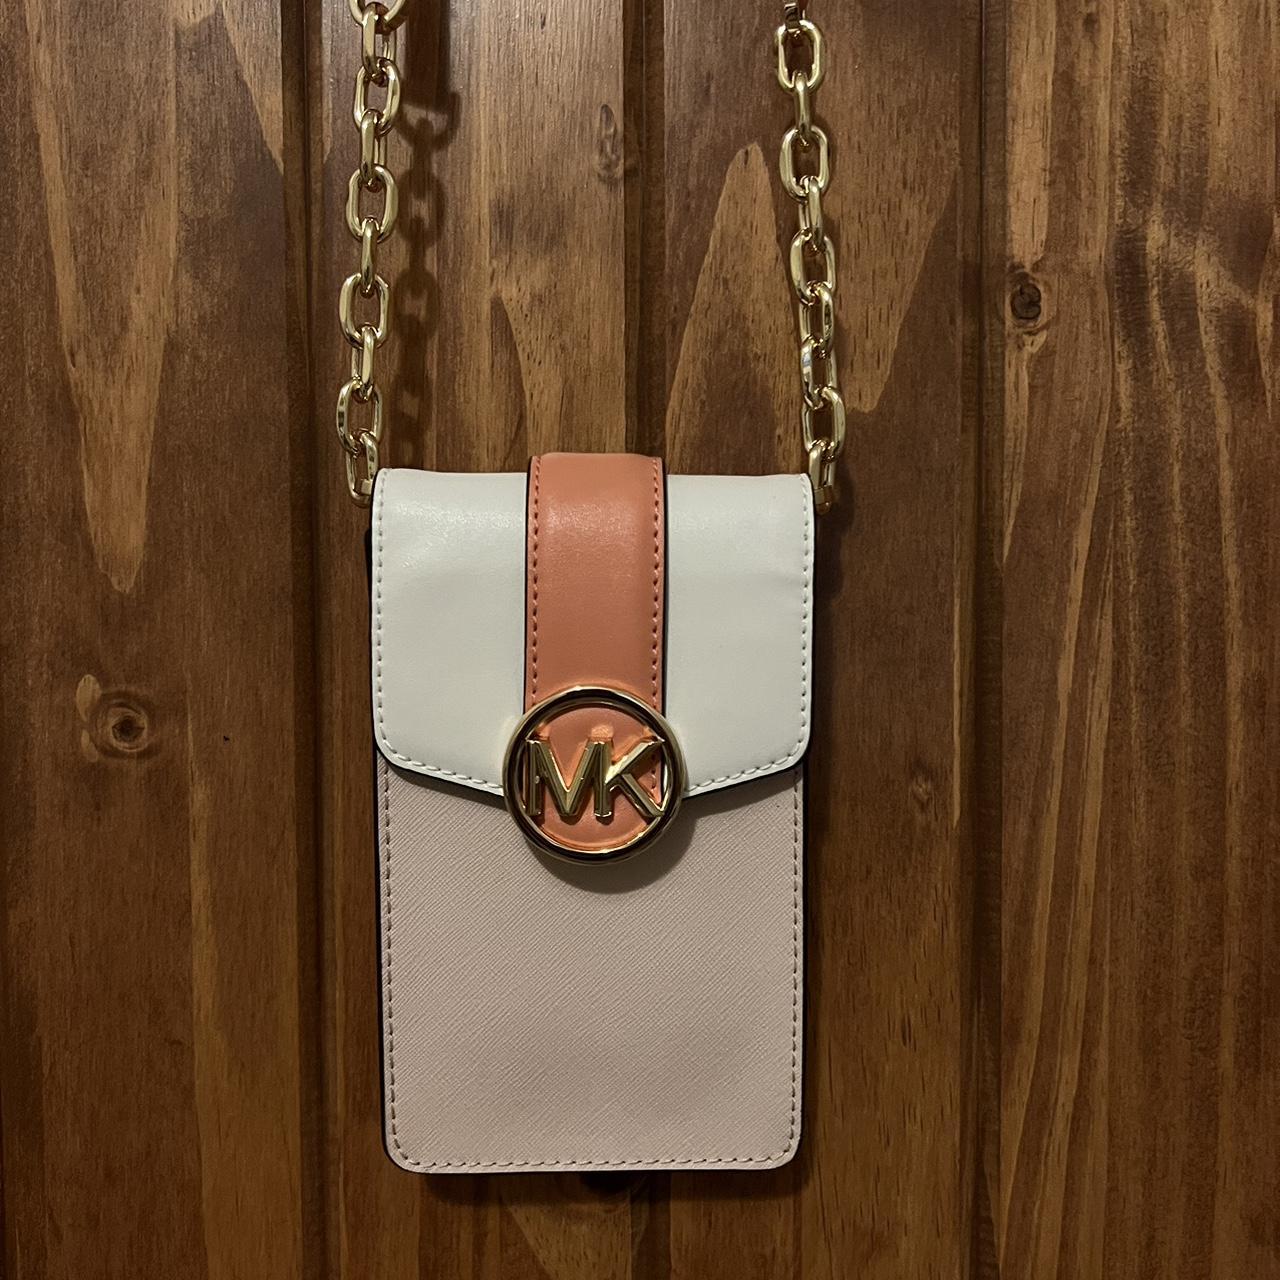 Michael Kors Women's White and Pink Bag